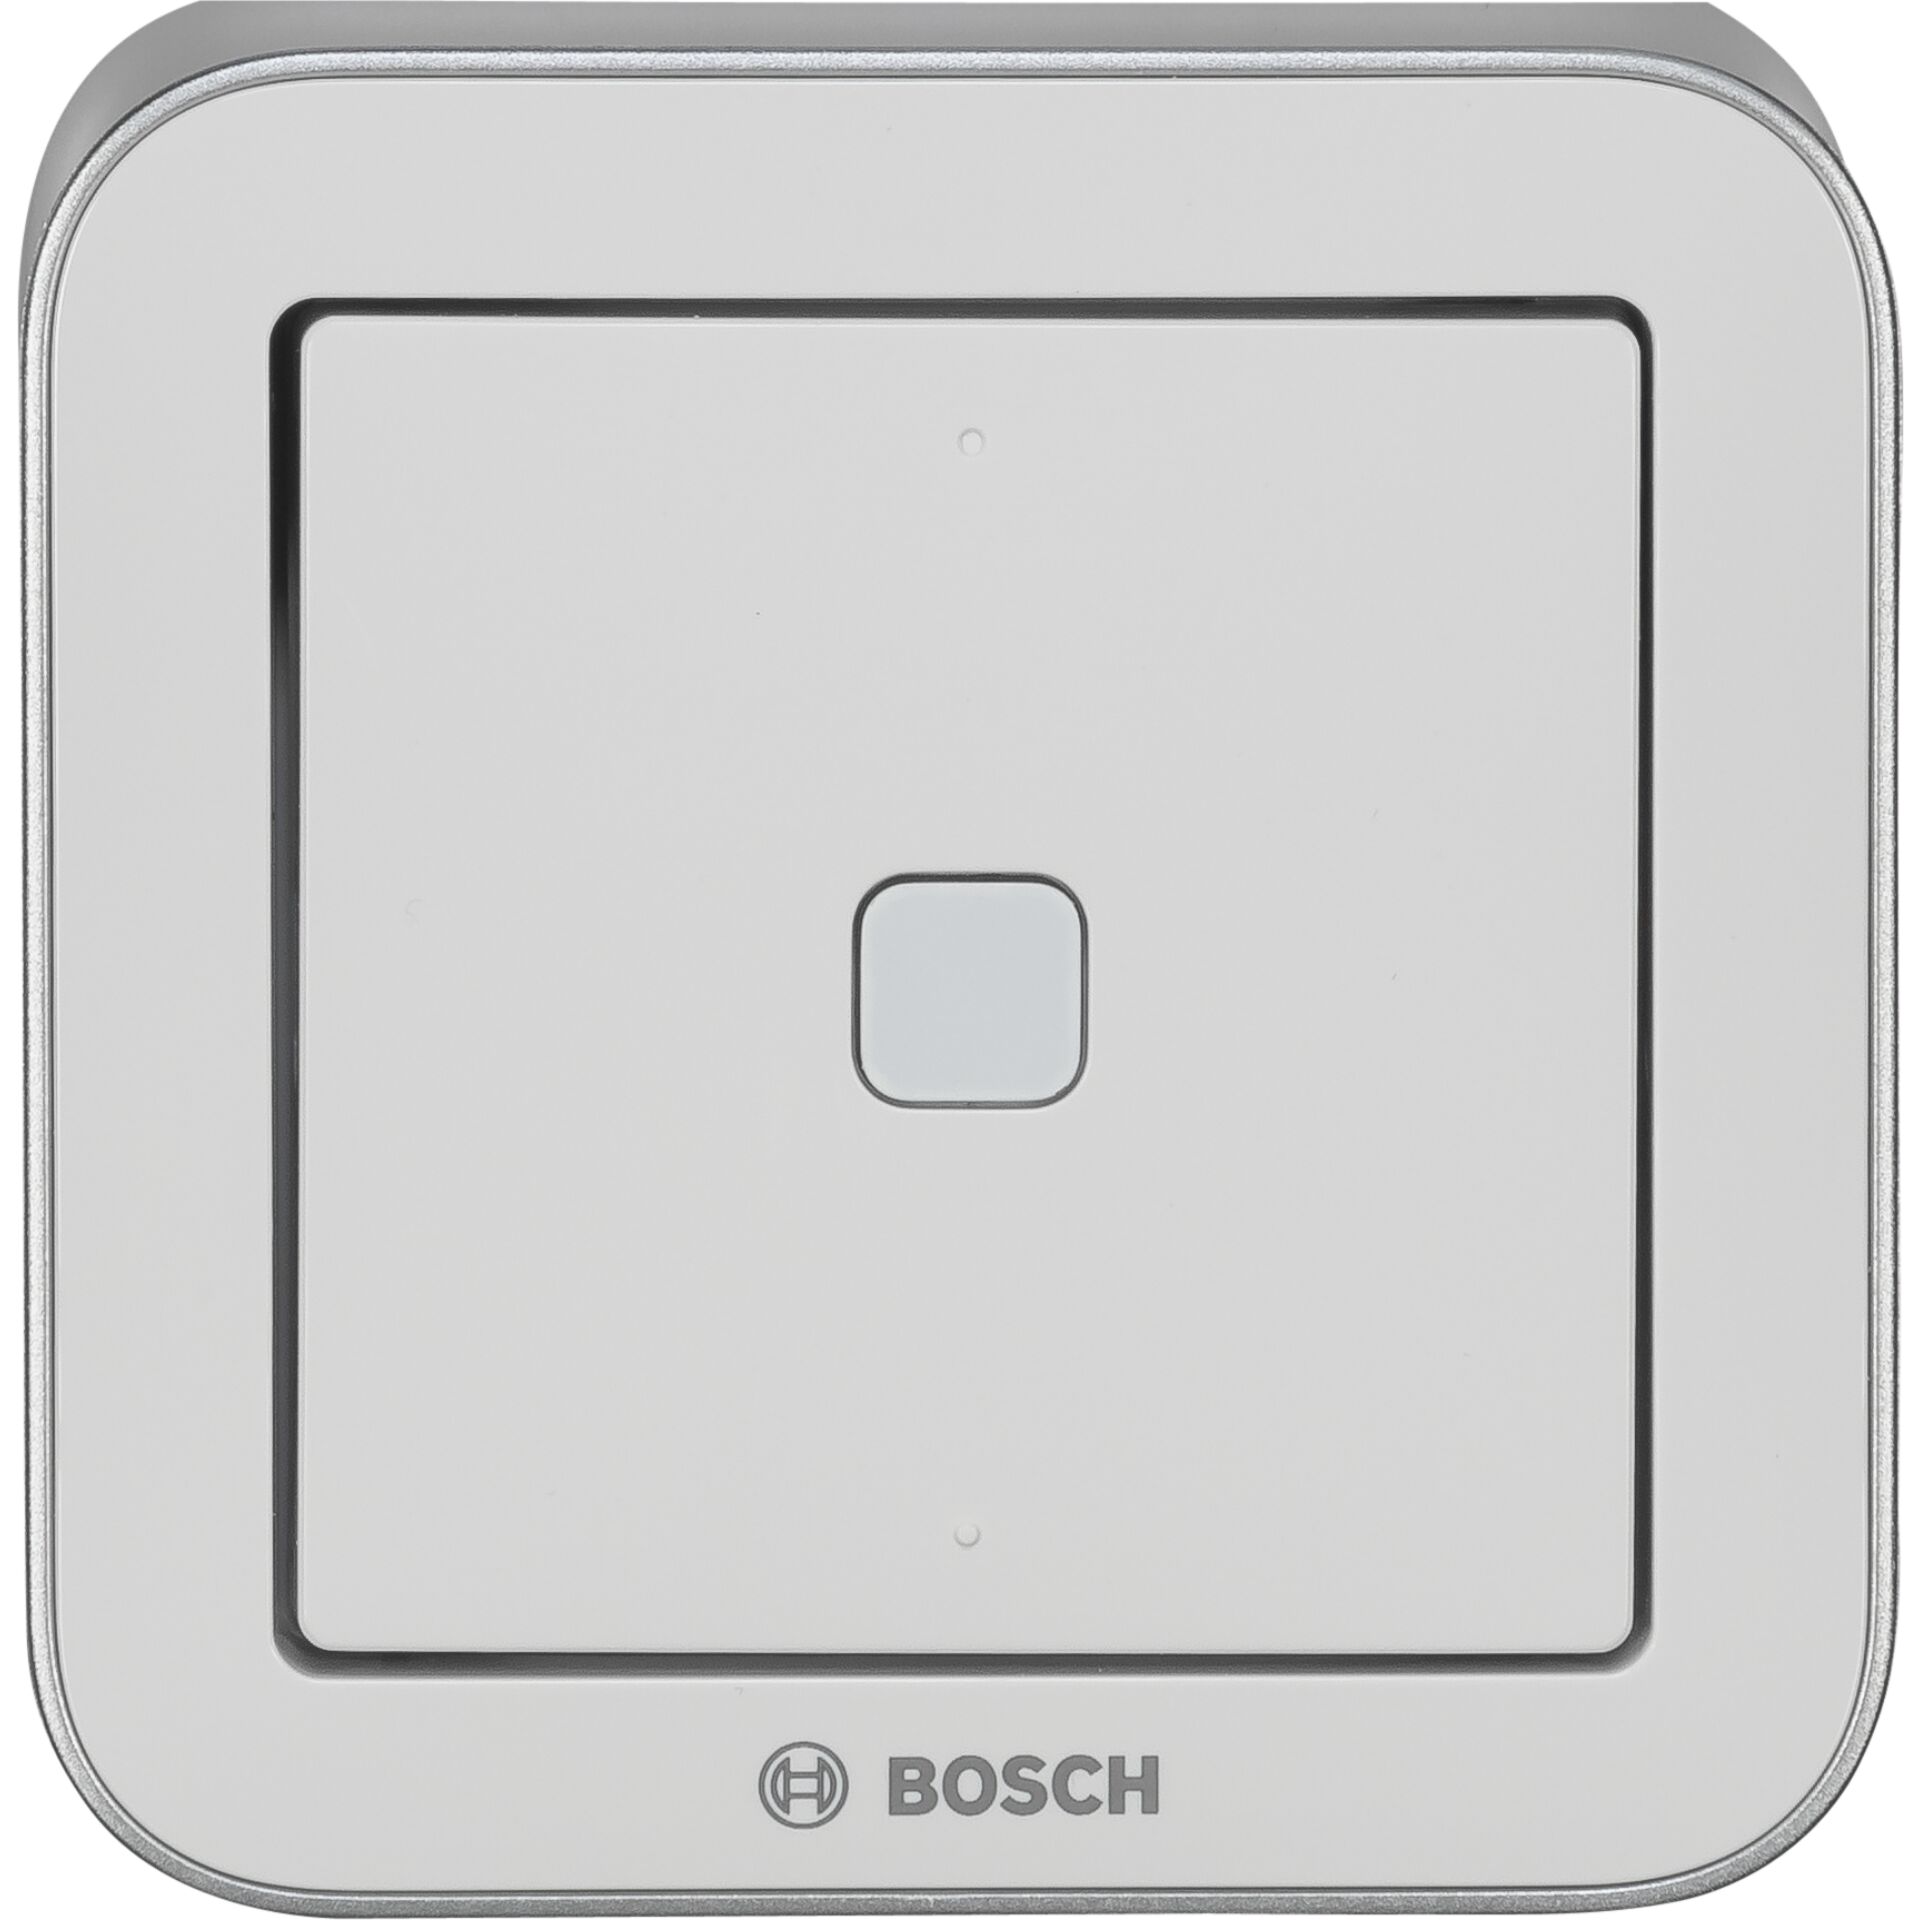 Bosch Smart Home Flex Universalschalter